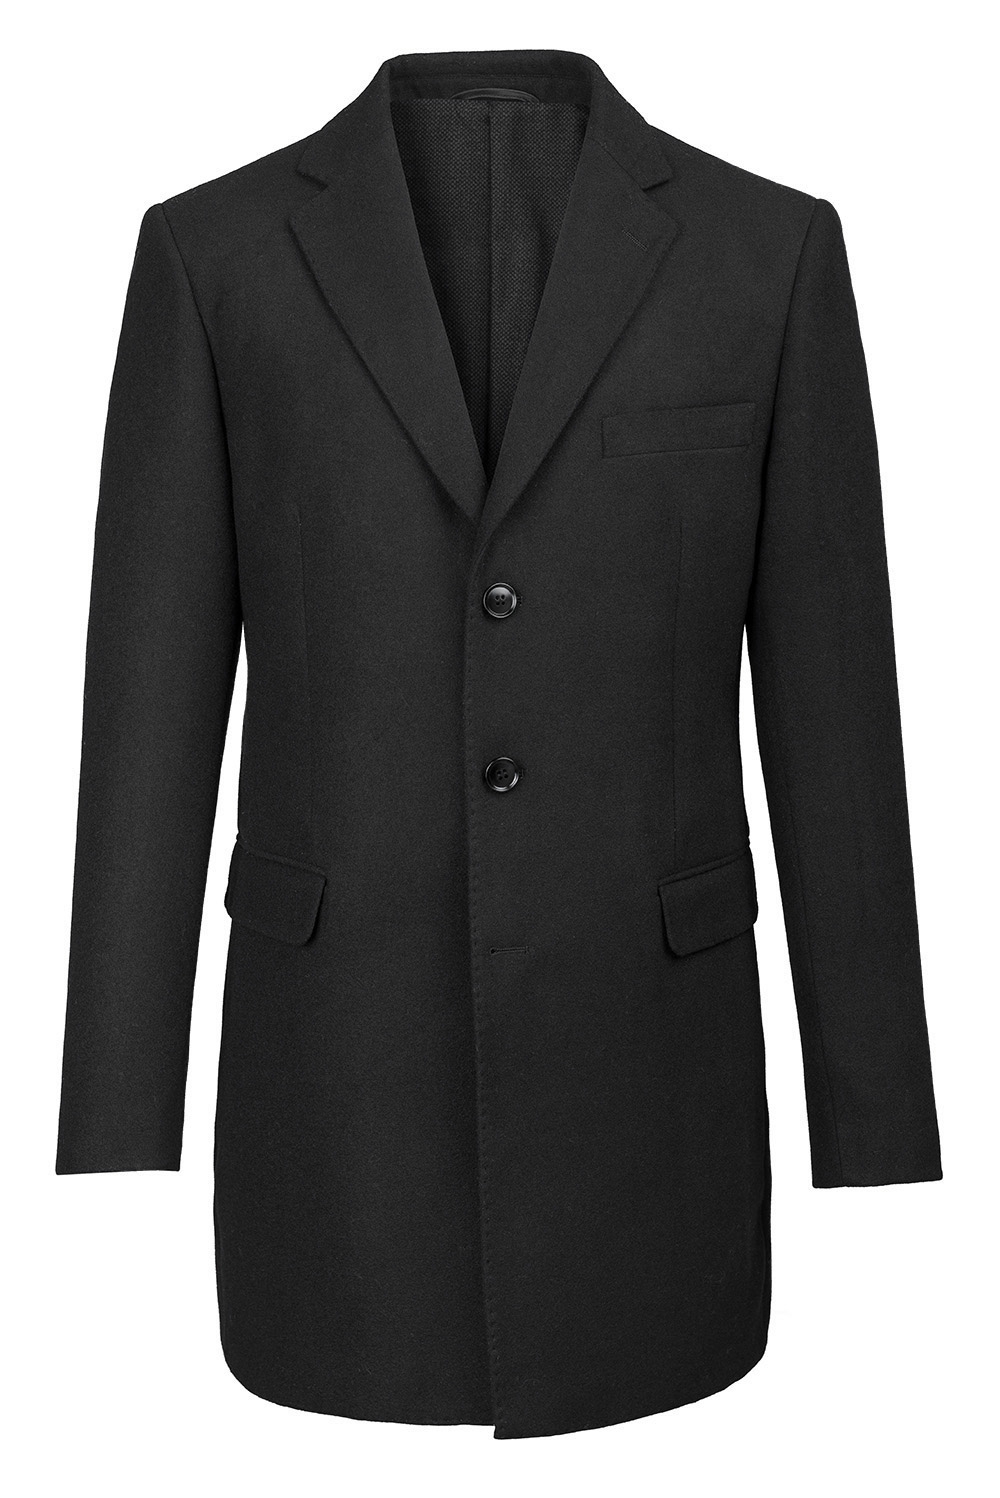 Palton casual negru uni 2